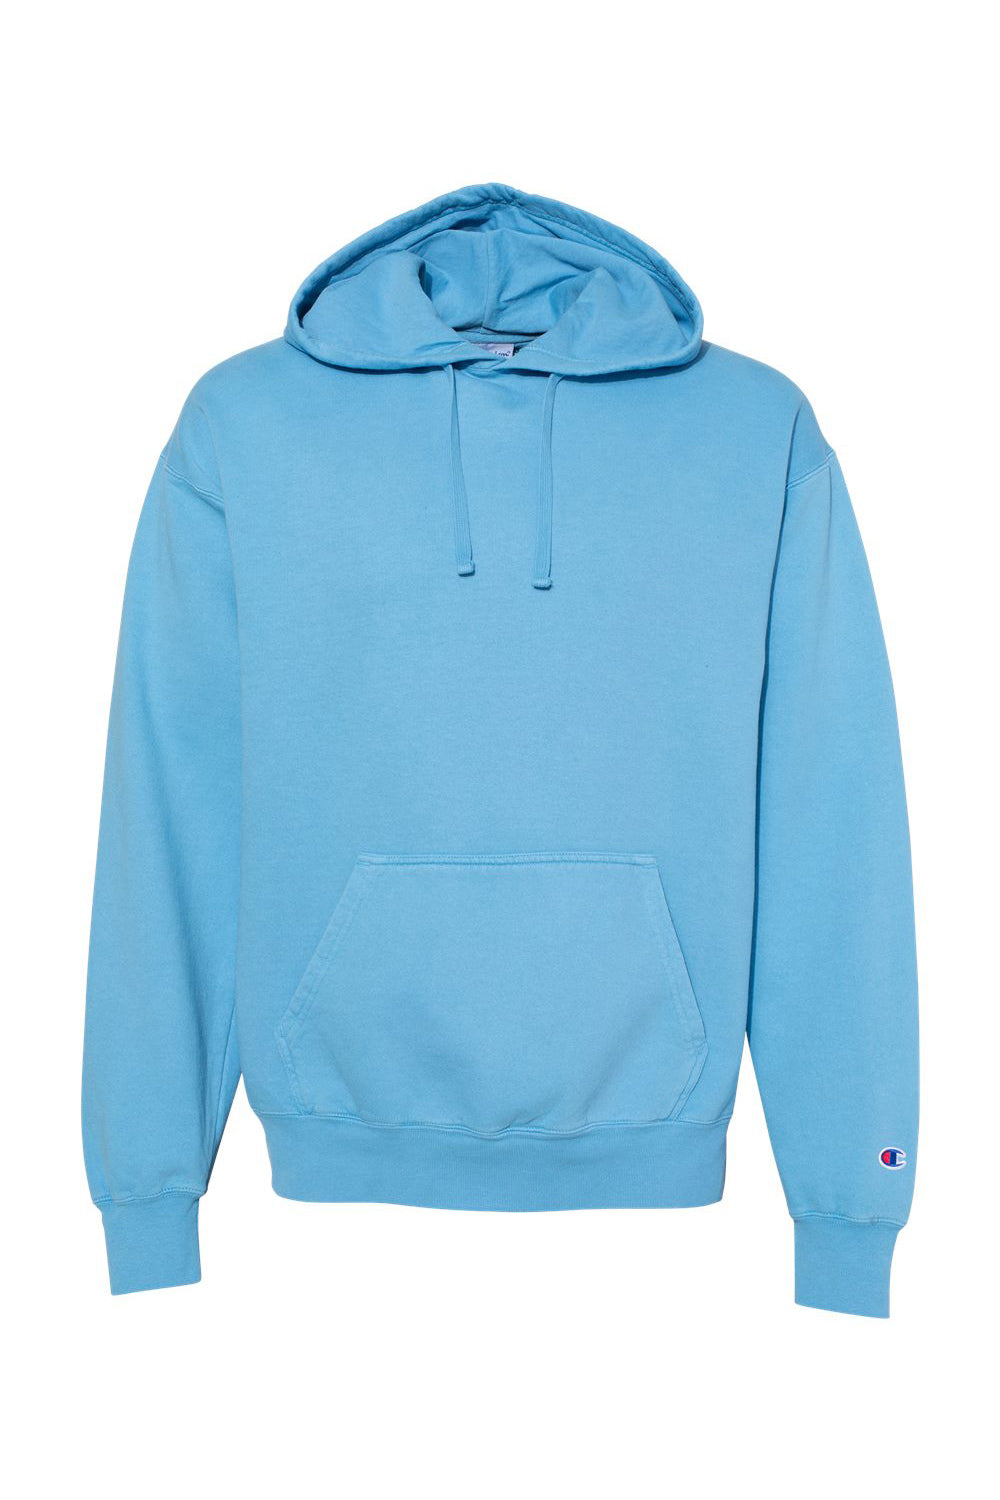 Champion CD450 Mens Garment Dyed Hooded Sweatshirt Hoodie Delicate Blue Flat Front